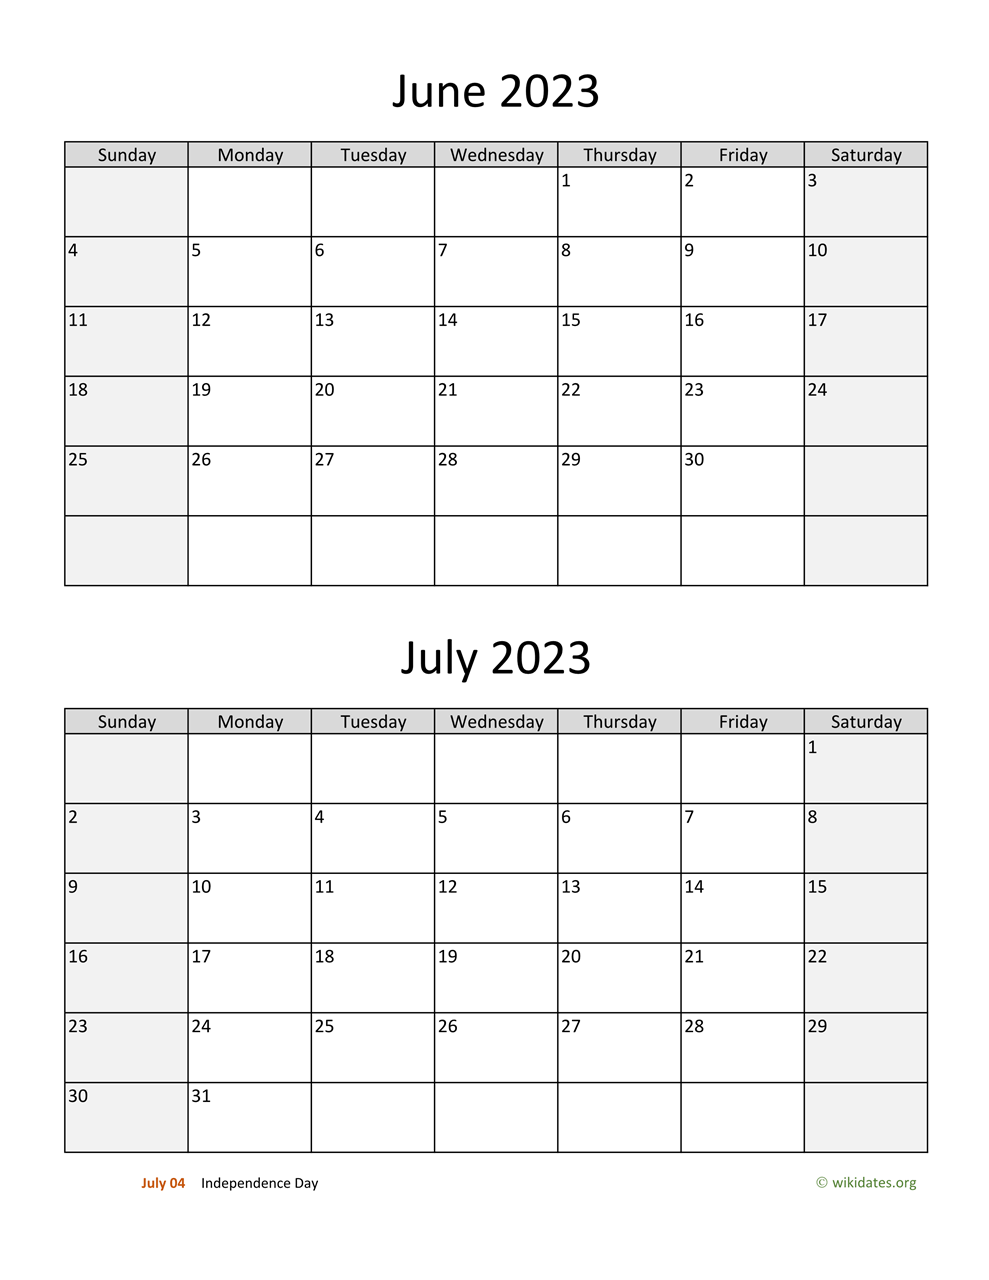 June And July 2023 Calendar WikiDates